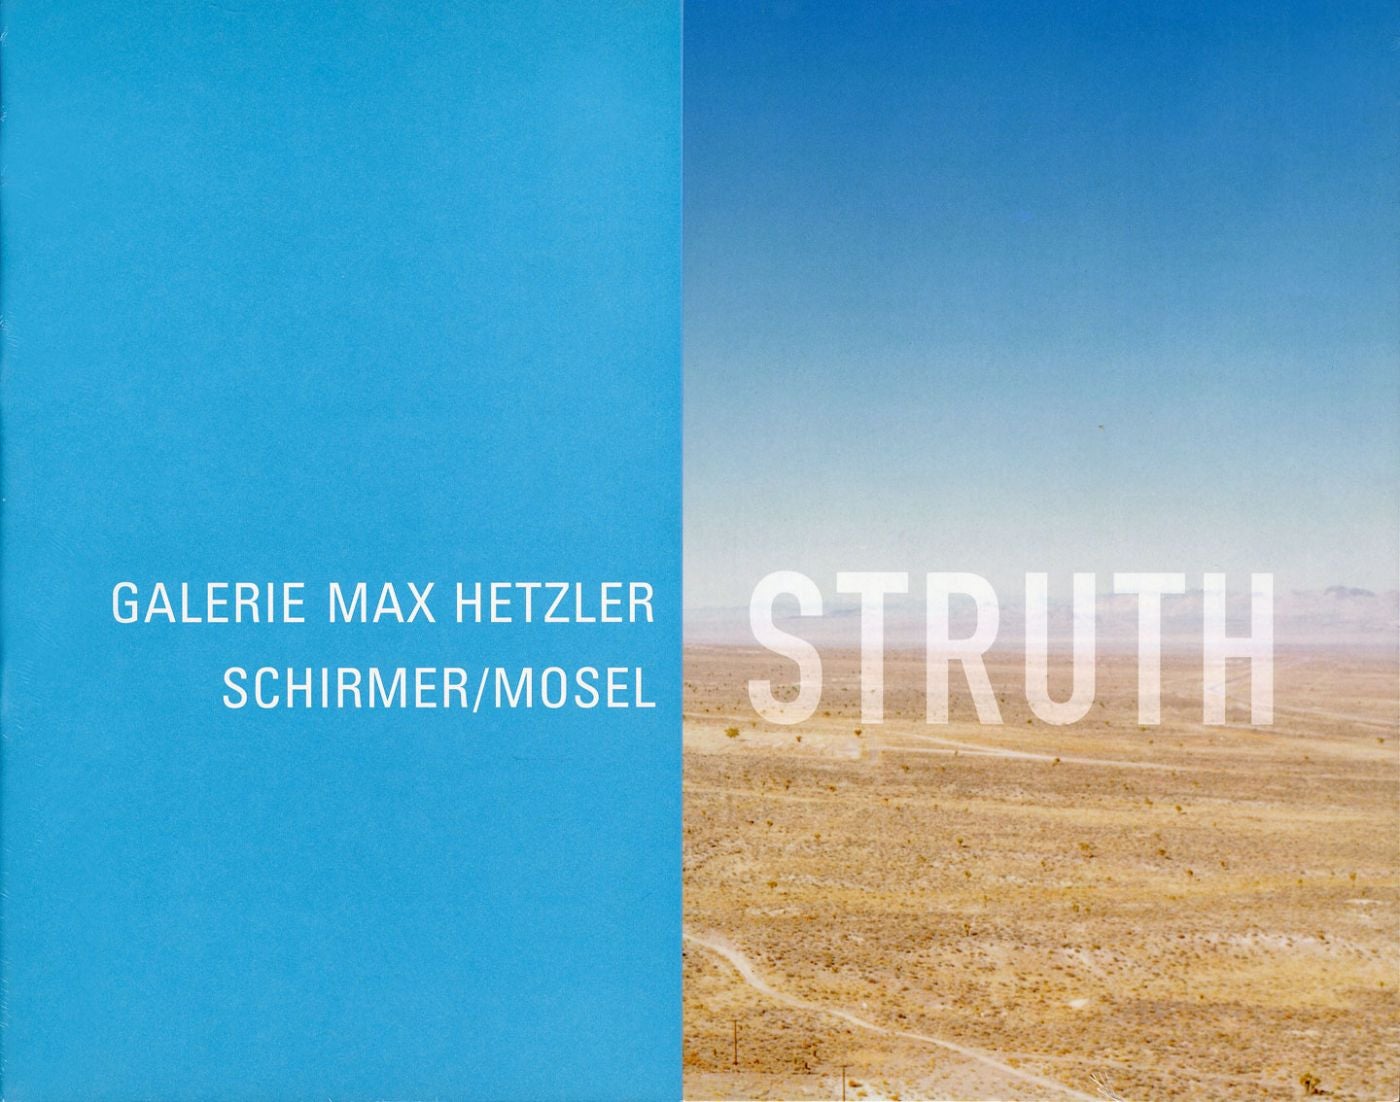 Thomas Struth (Galerie Max Hetzler)